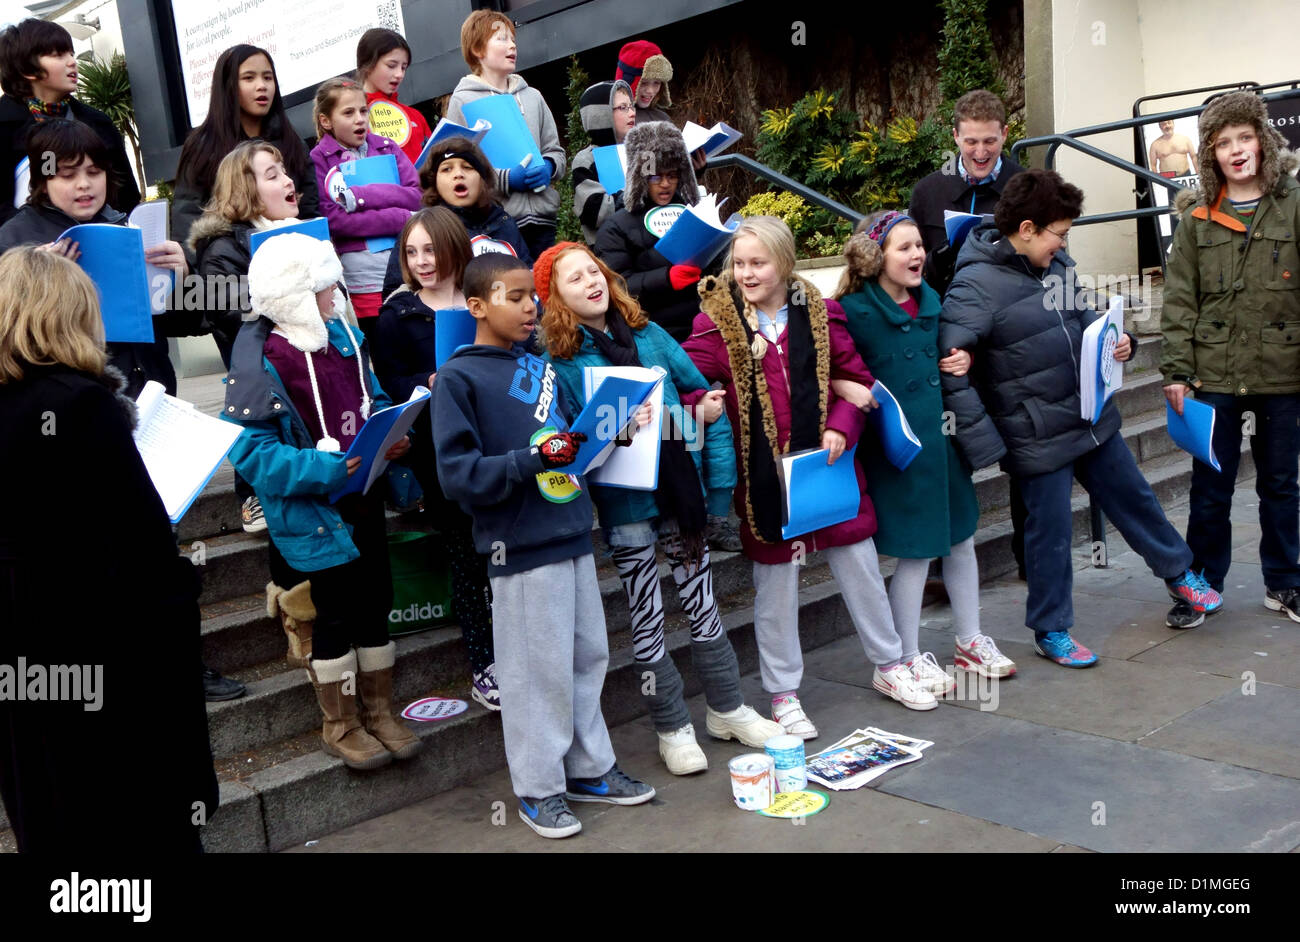 Children's choir sing Christmas carols in London street to raise funds Stock Photo